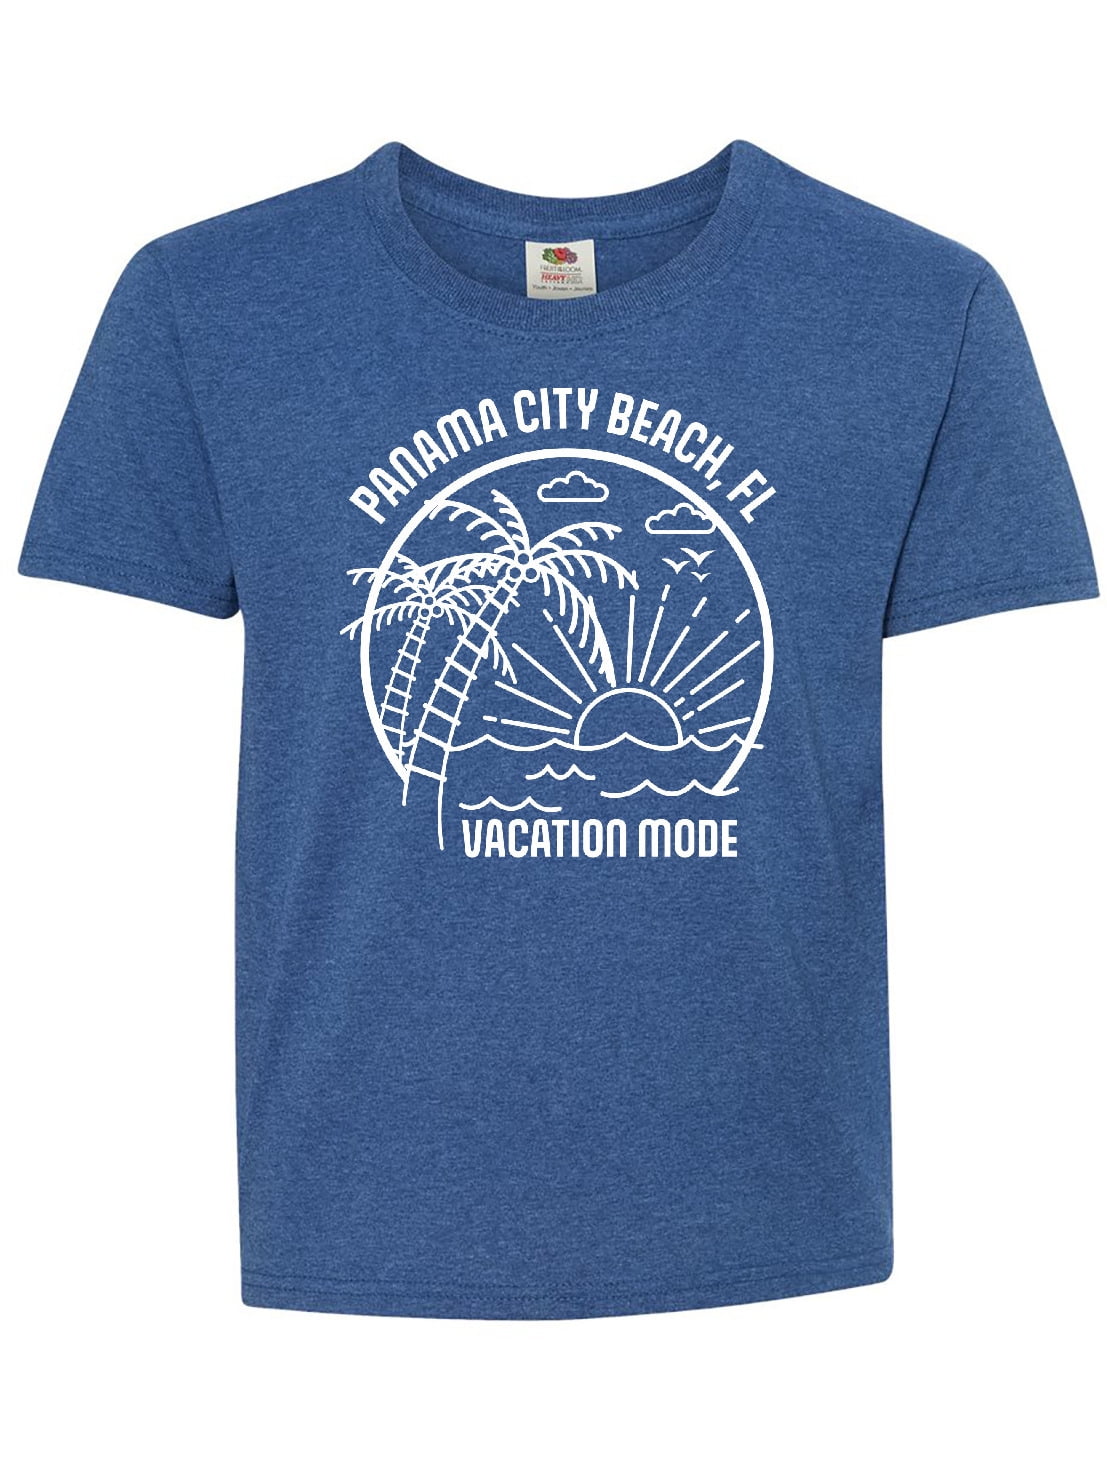 Summer Vacation Mode Panama City Beach Florida Youth T-Shirt - Walmart ...